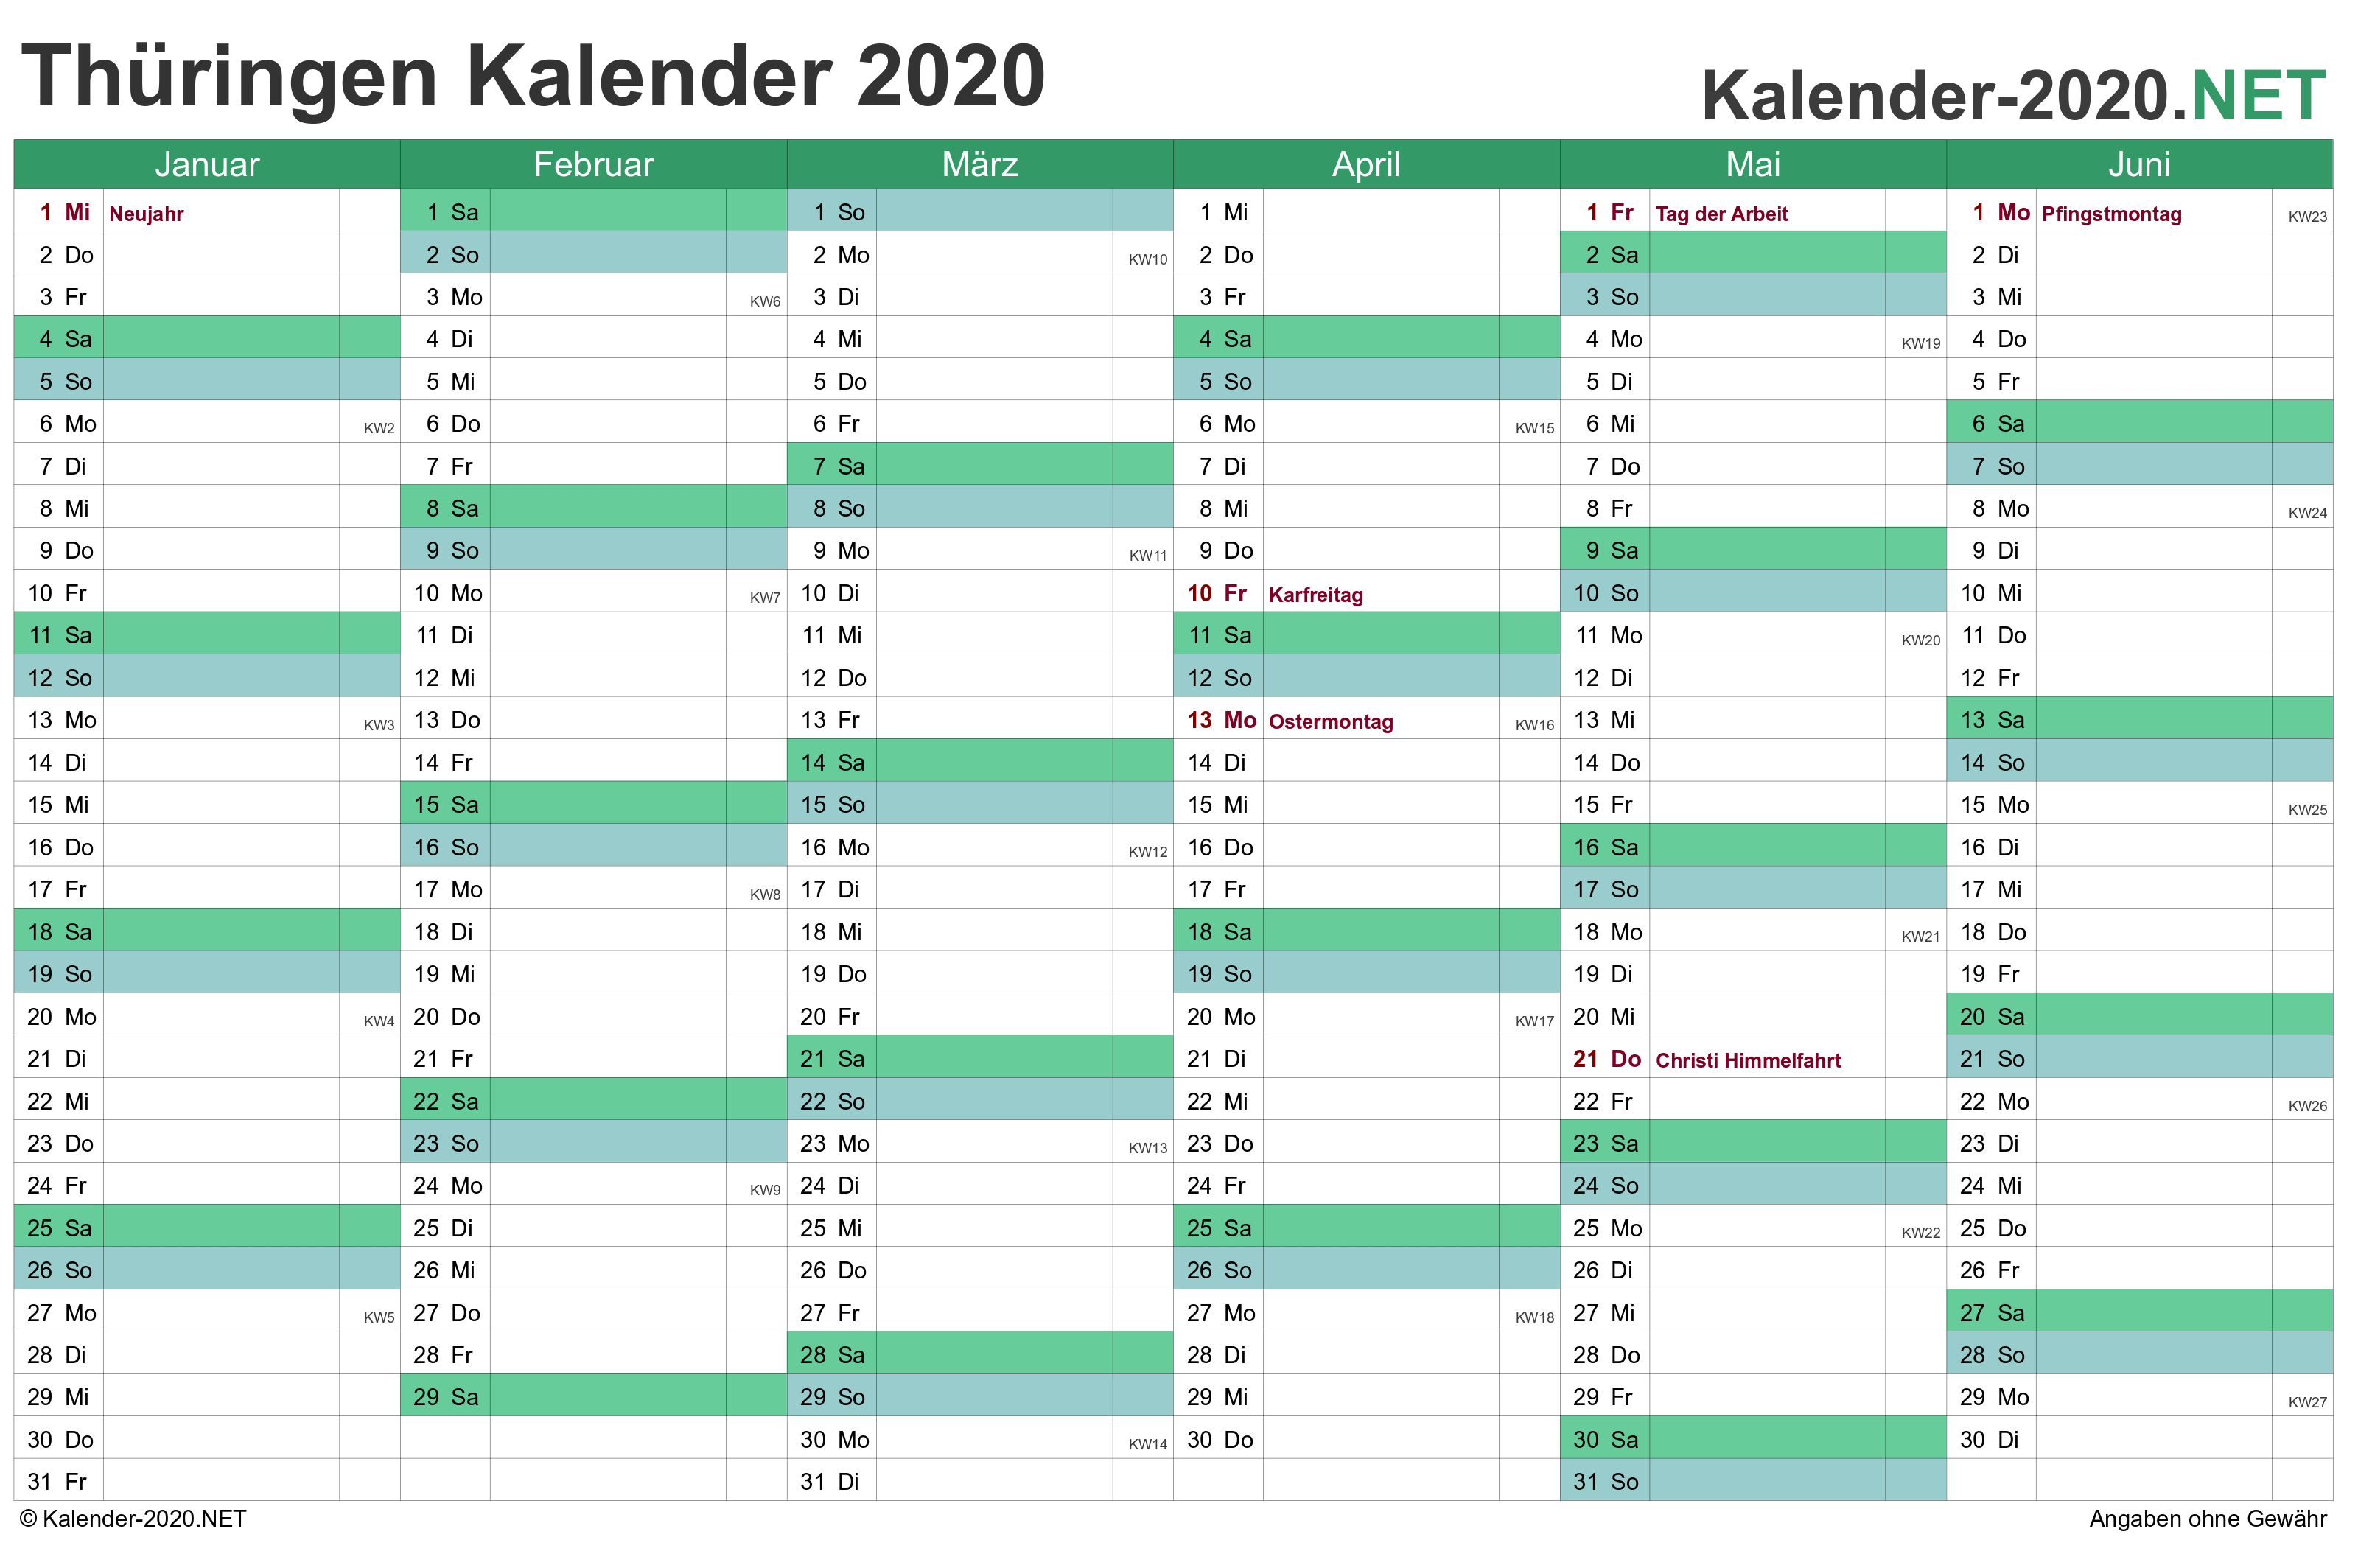 Kalender 2020 Thuringen